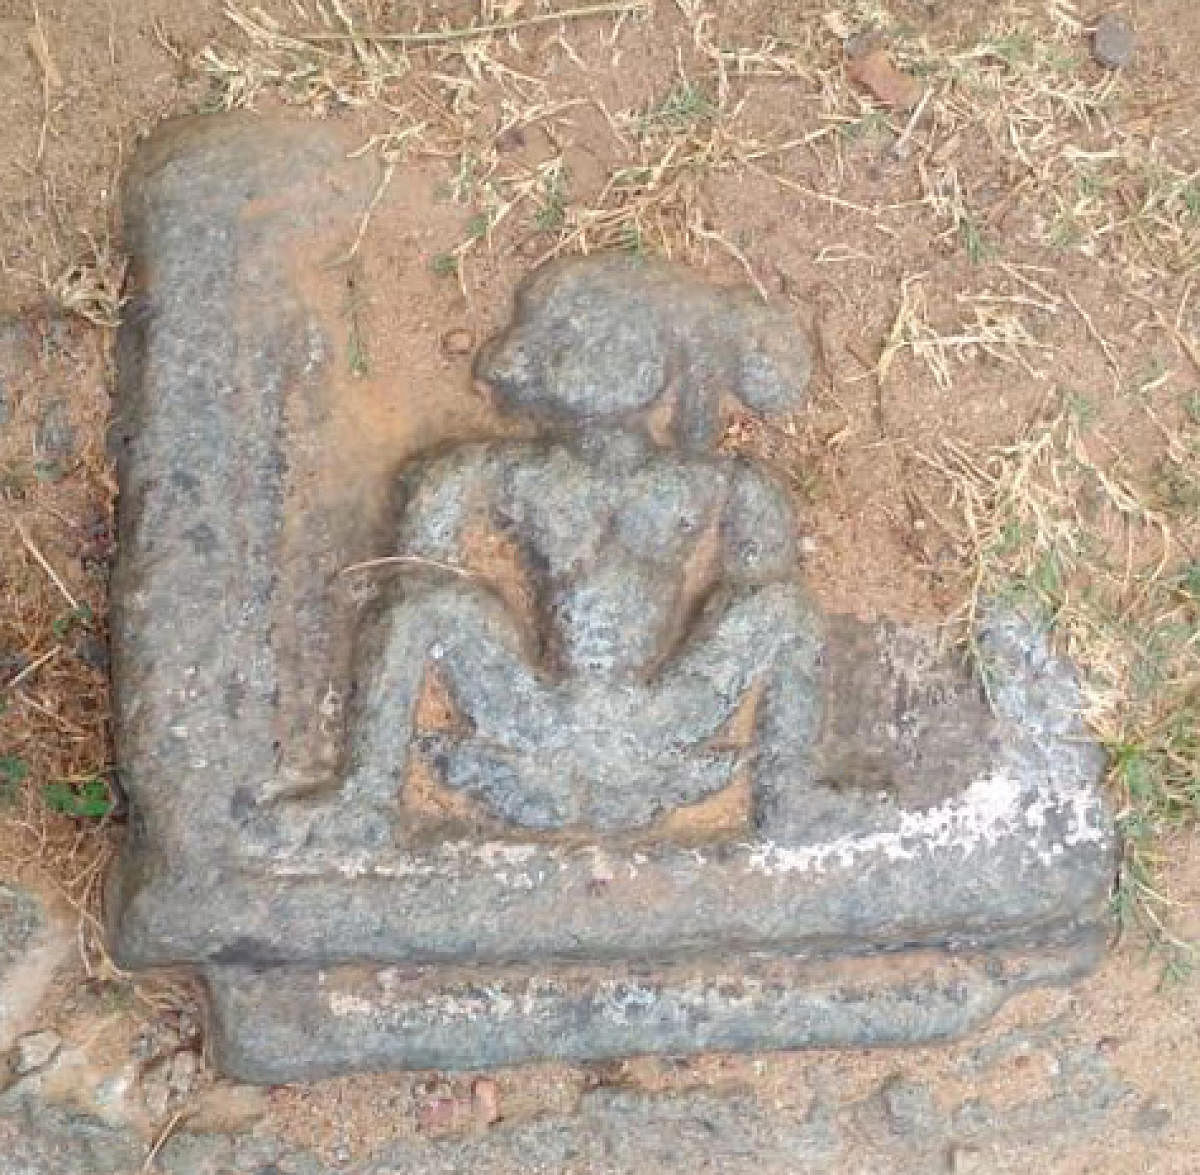 The Lajja Gauri idol found in Barkur village in Udupi.